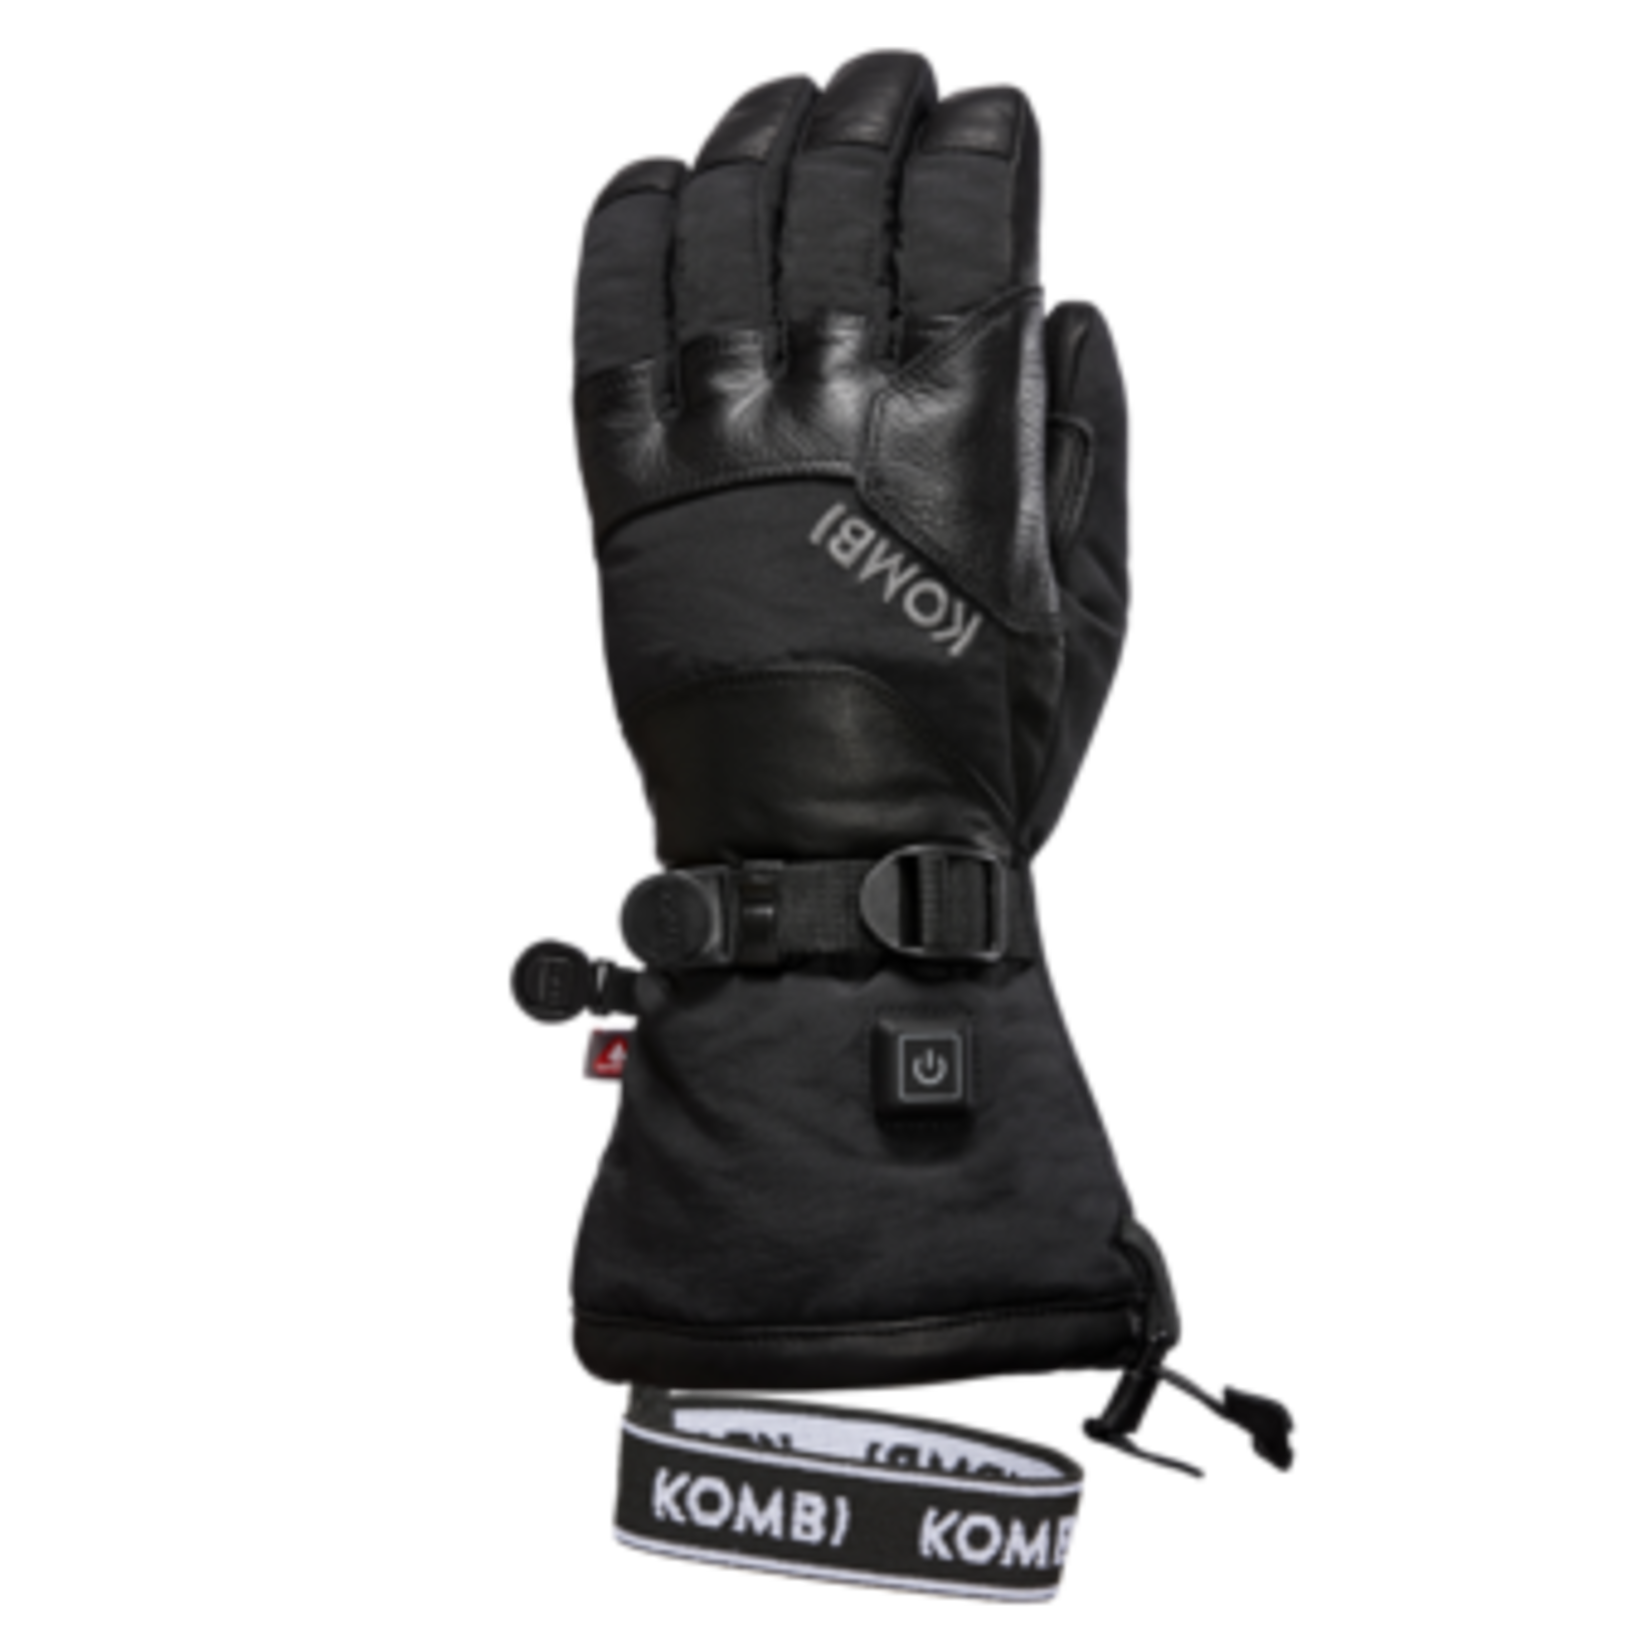 KOMBI Warm-up heated gloves - Adults